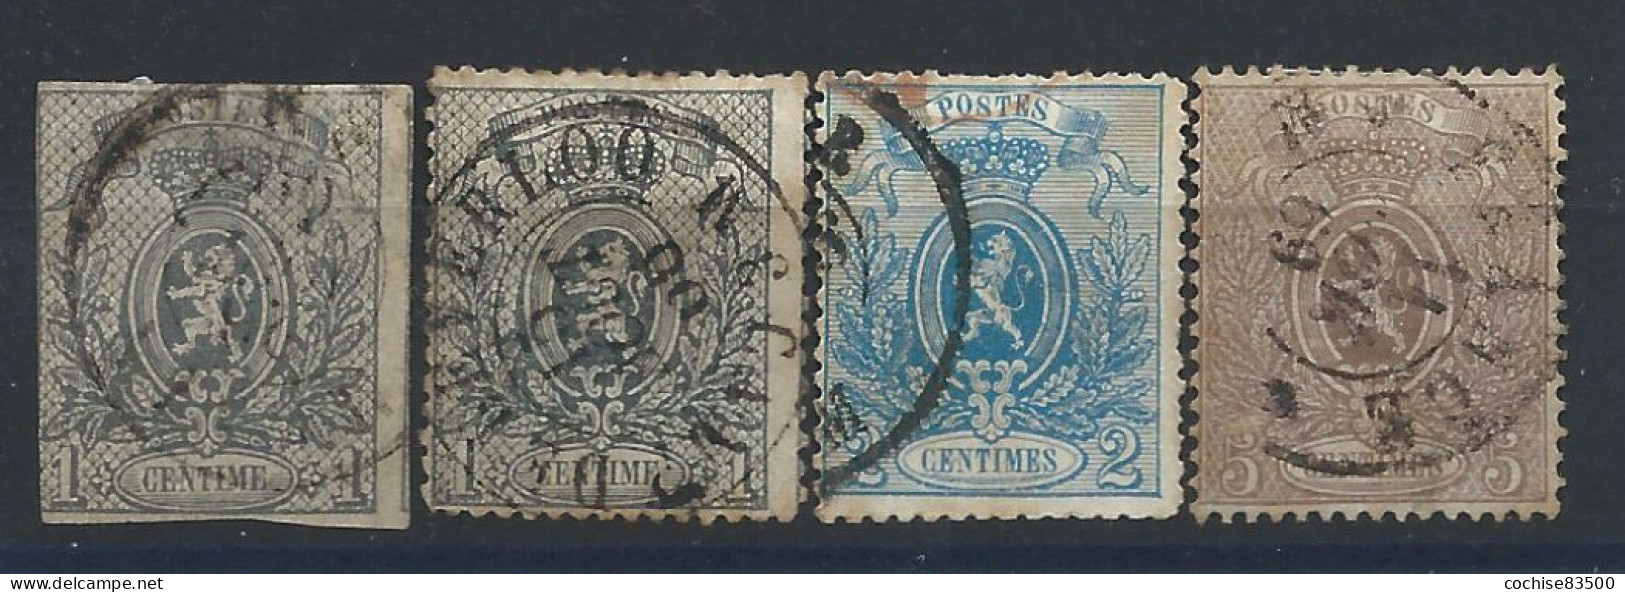 Belgique N°22/25 Obl (FU) 1866/67 - Armoiries - 1866-1867 Blasón